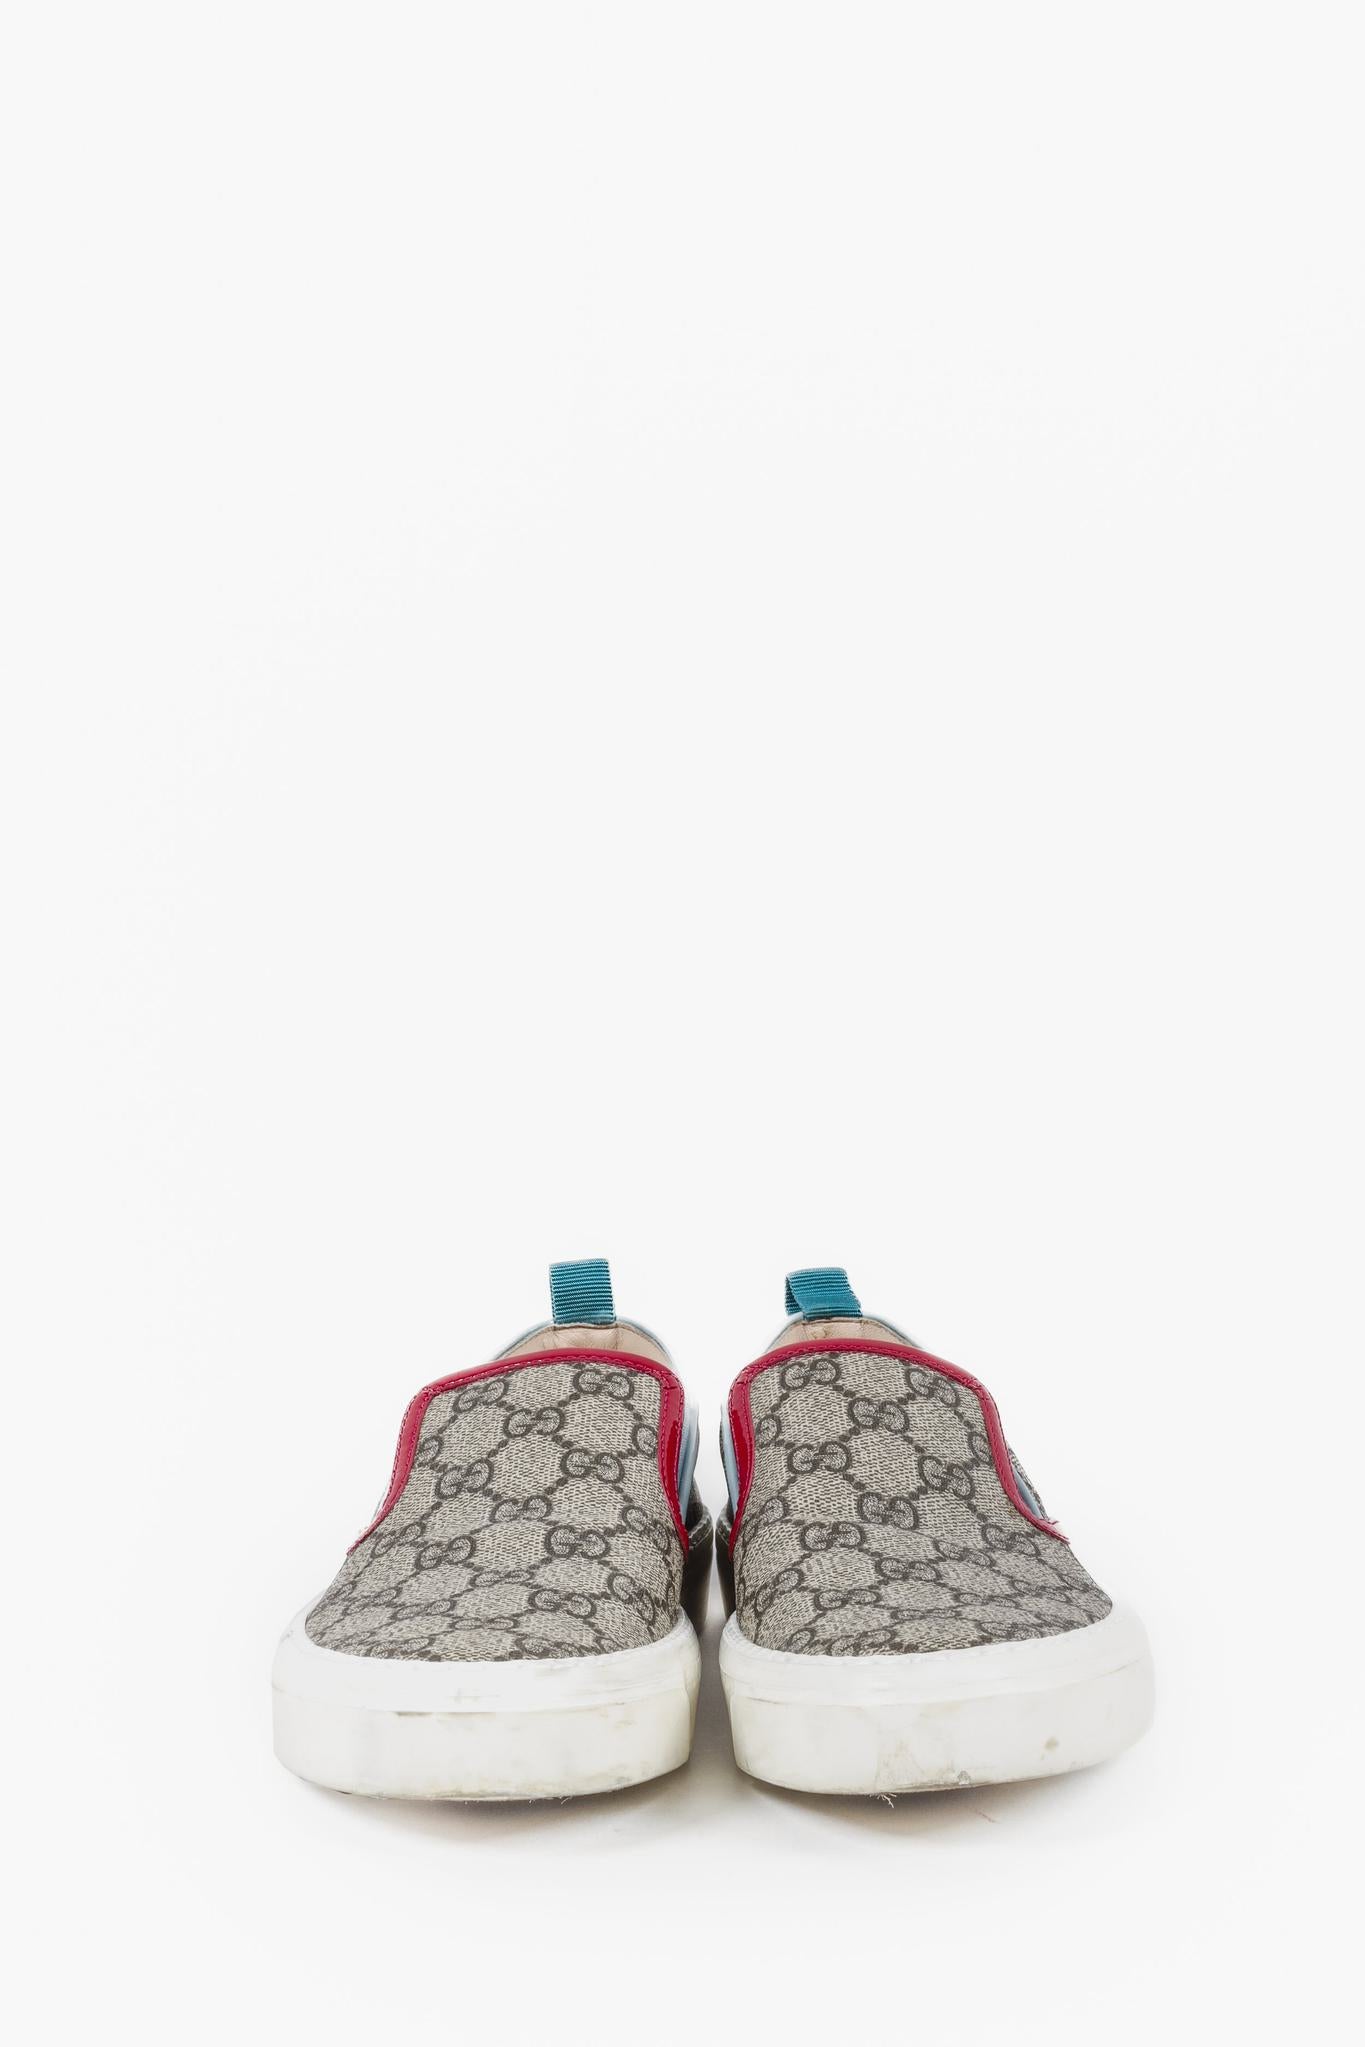 Gucci Beige GG Canvas Slip On Sneaker